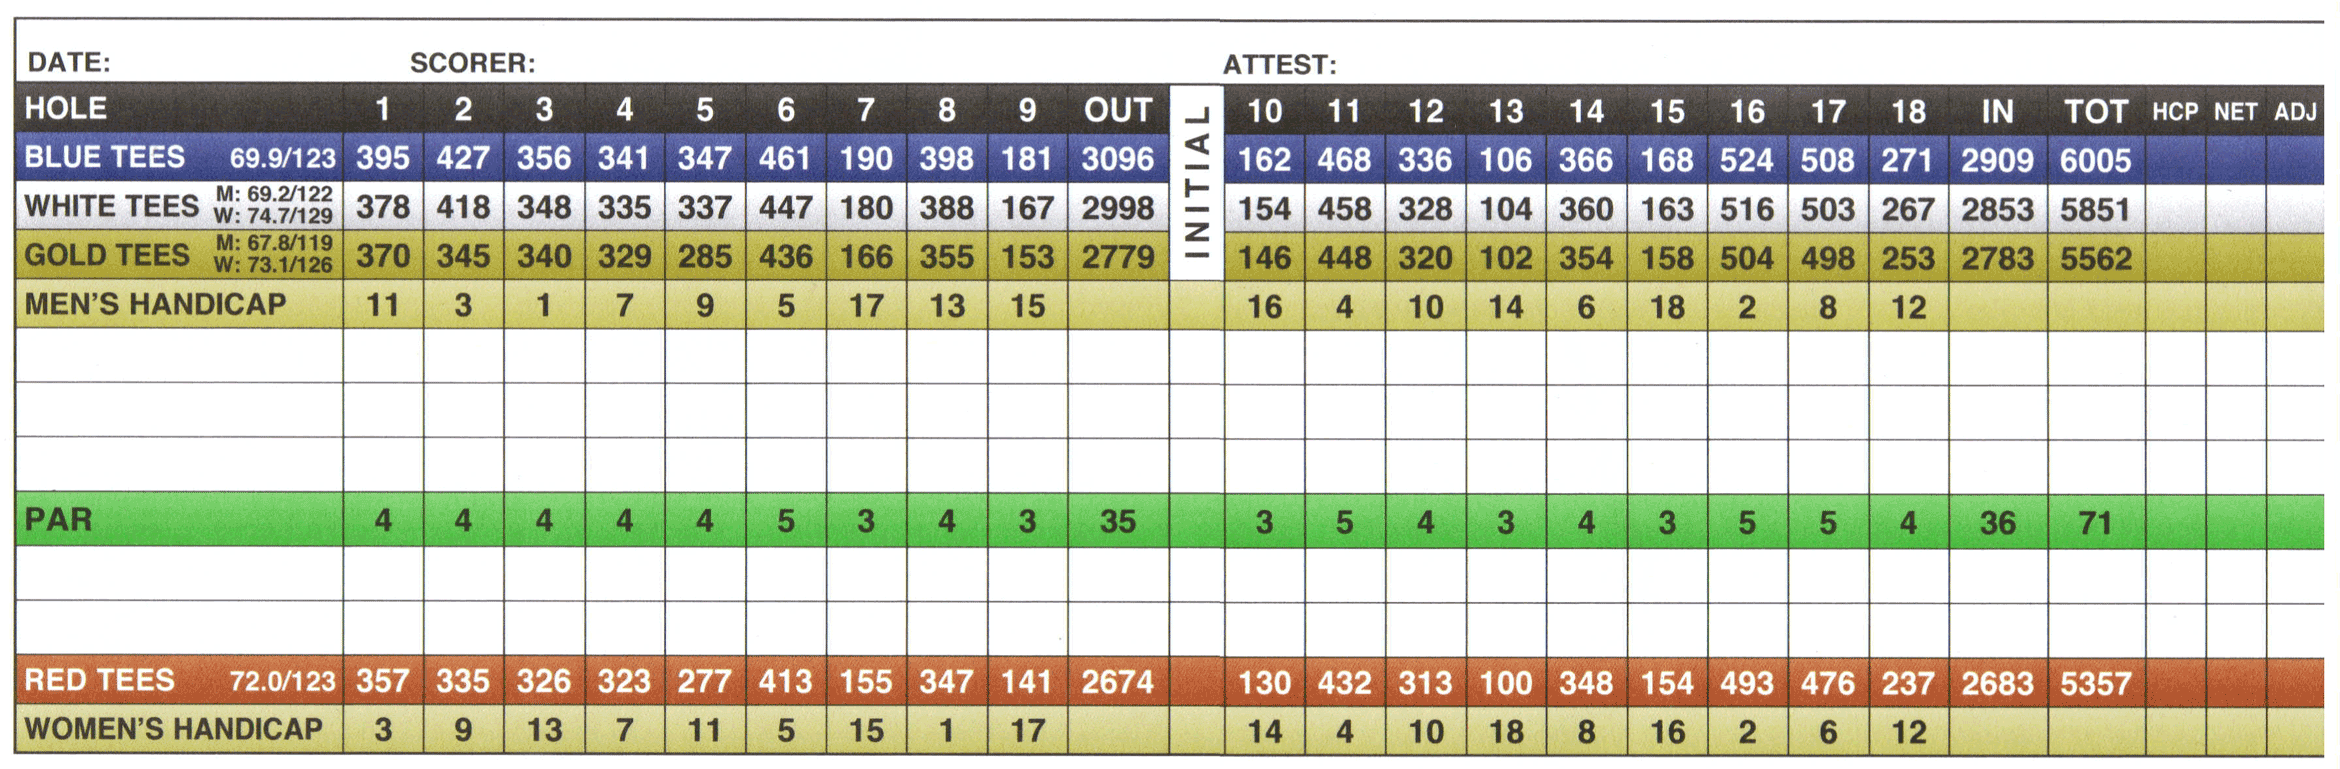 Spring Hills Golf Course Score Card